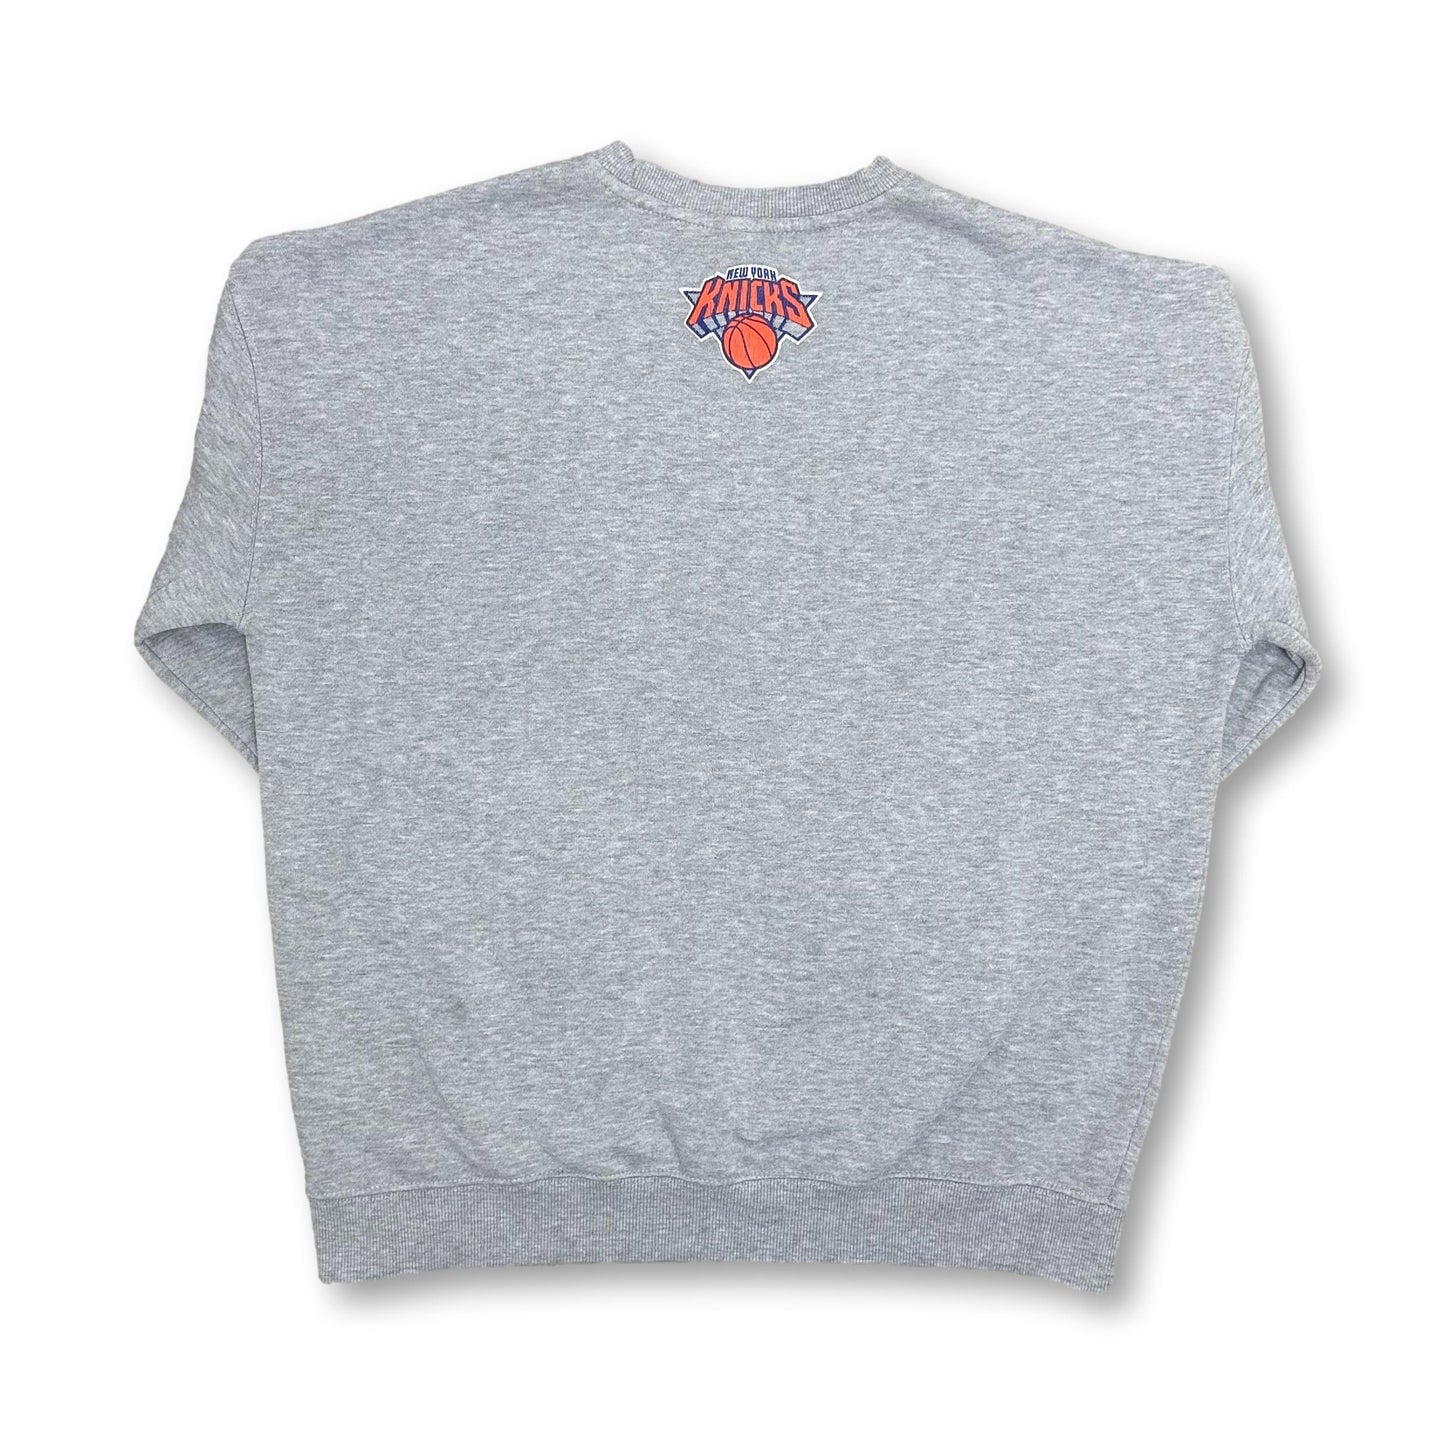 Reloved Knicks Sweat-Shirt